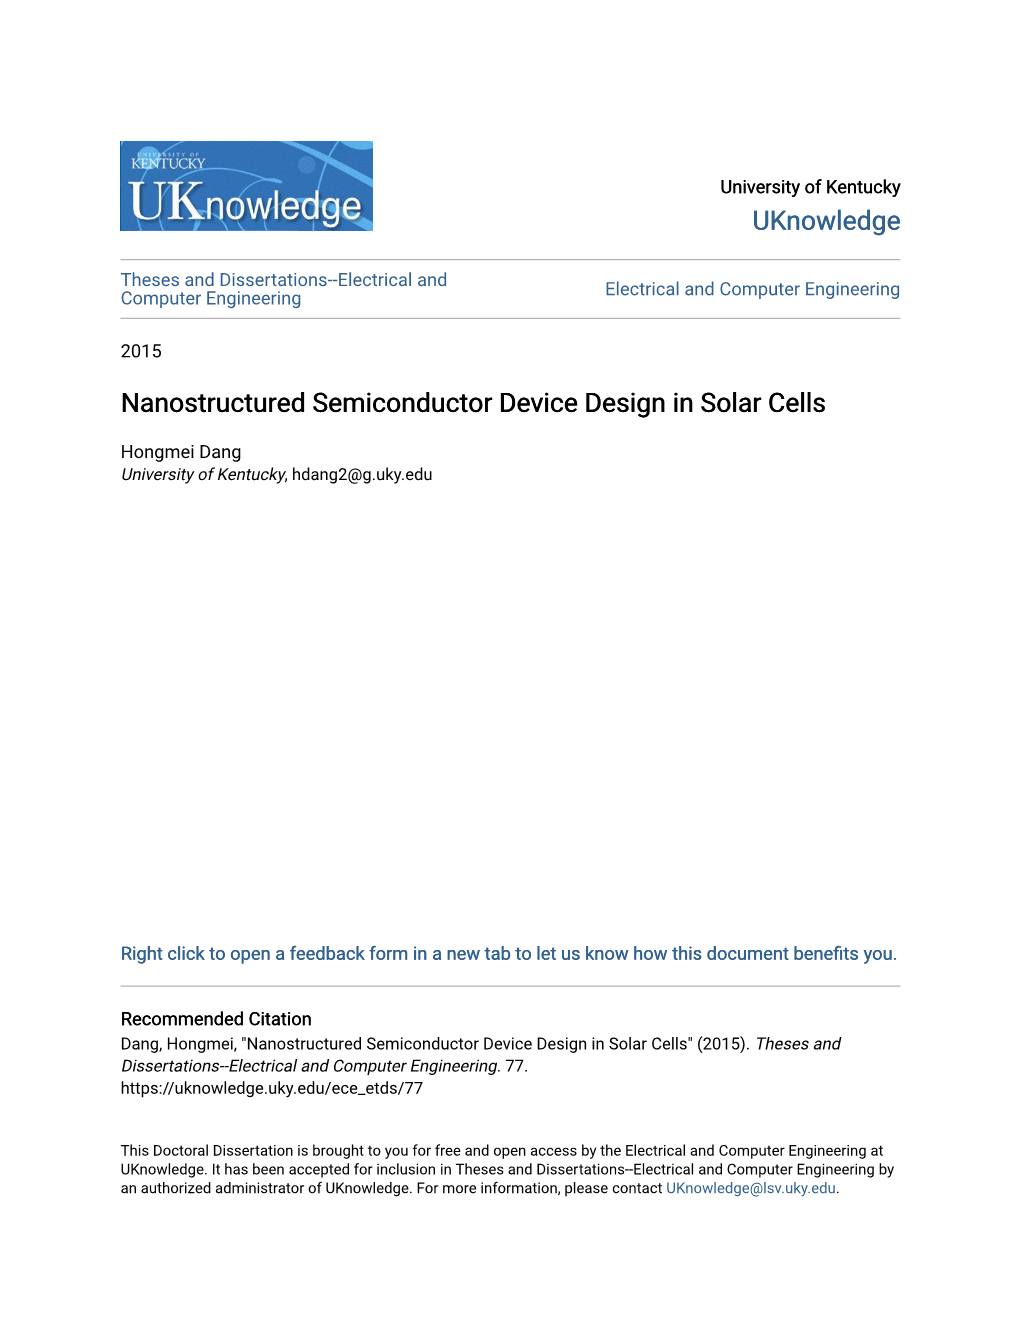 Nanostructured Semiconductor Device Design in Solar Cells